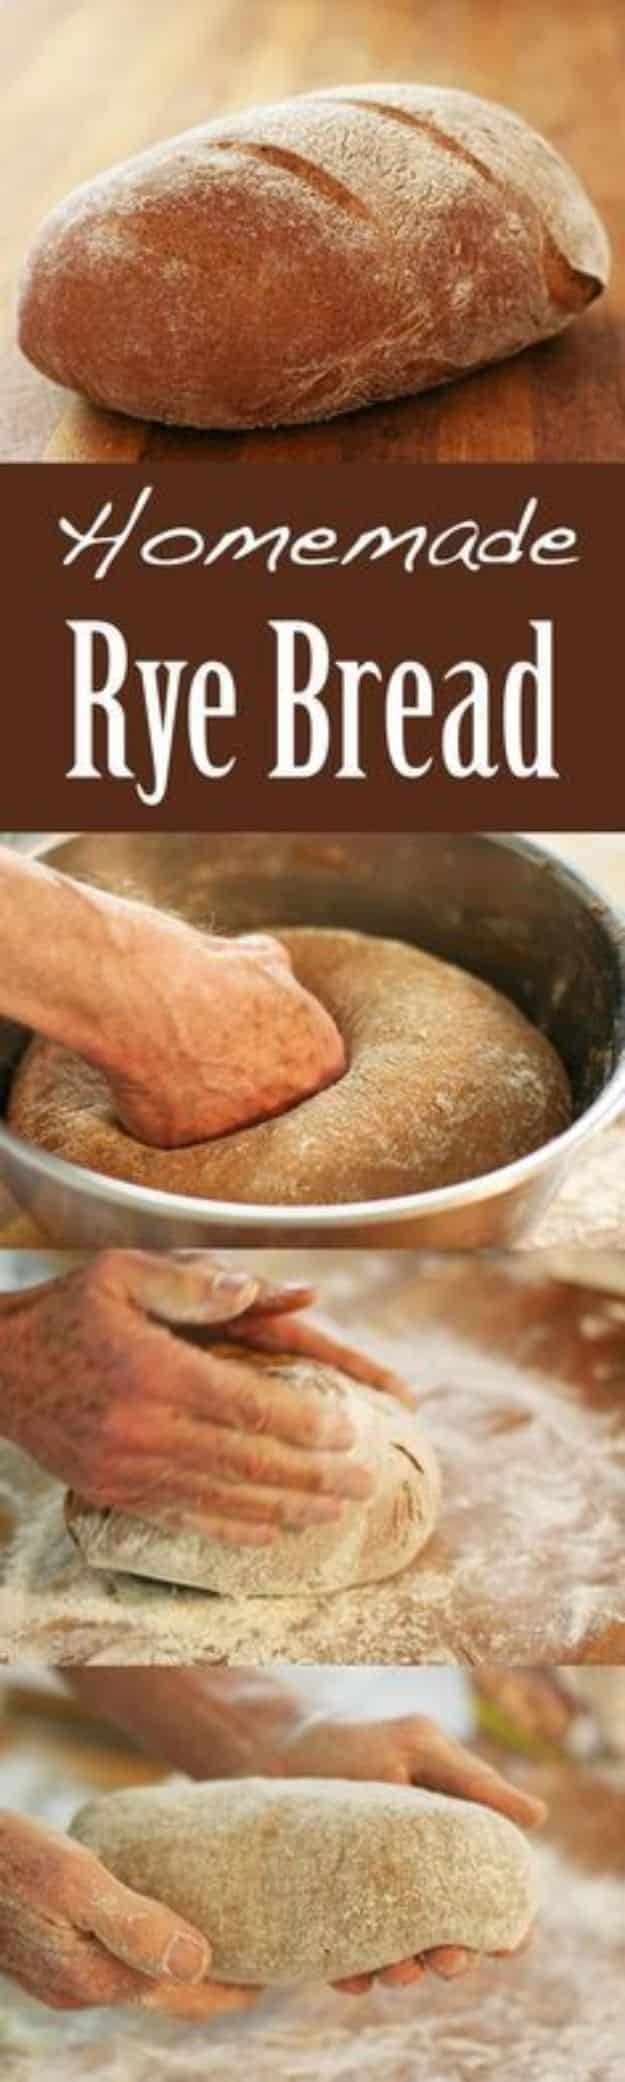 How to Make Homemade Light Rye Bread - Sandwich Bread Recipes - Easy rye Bread recipe